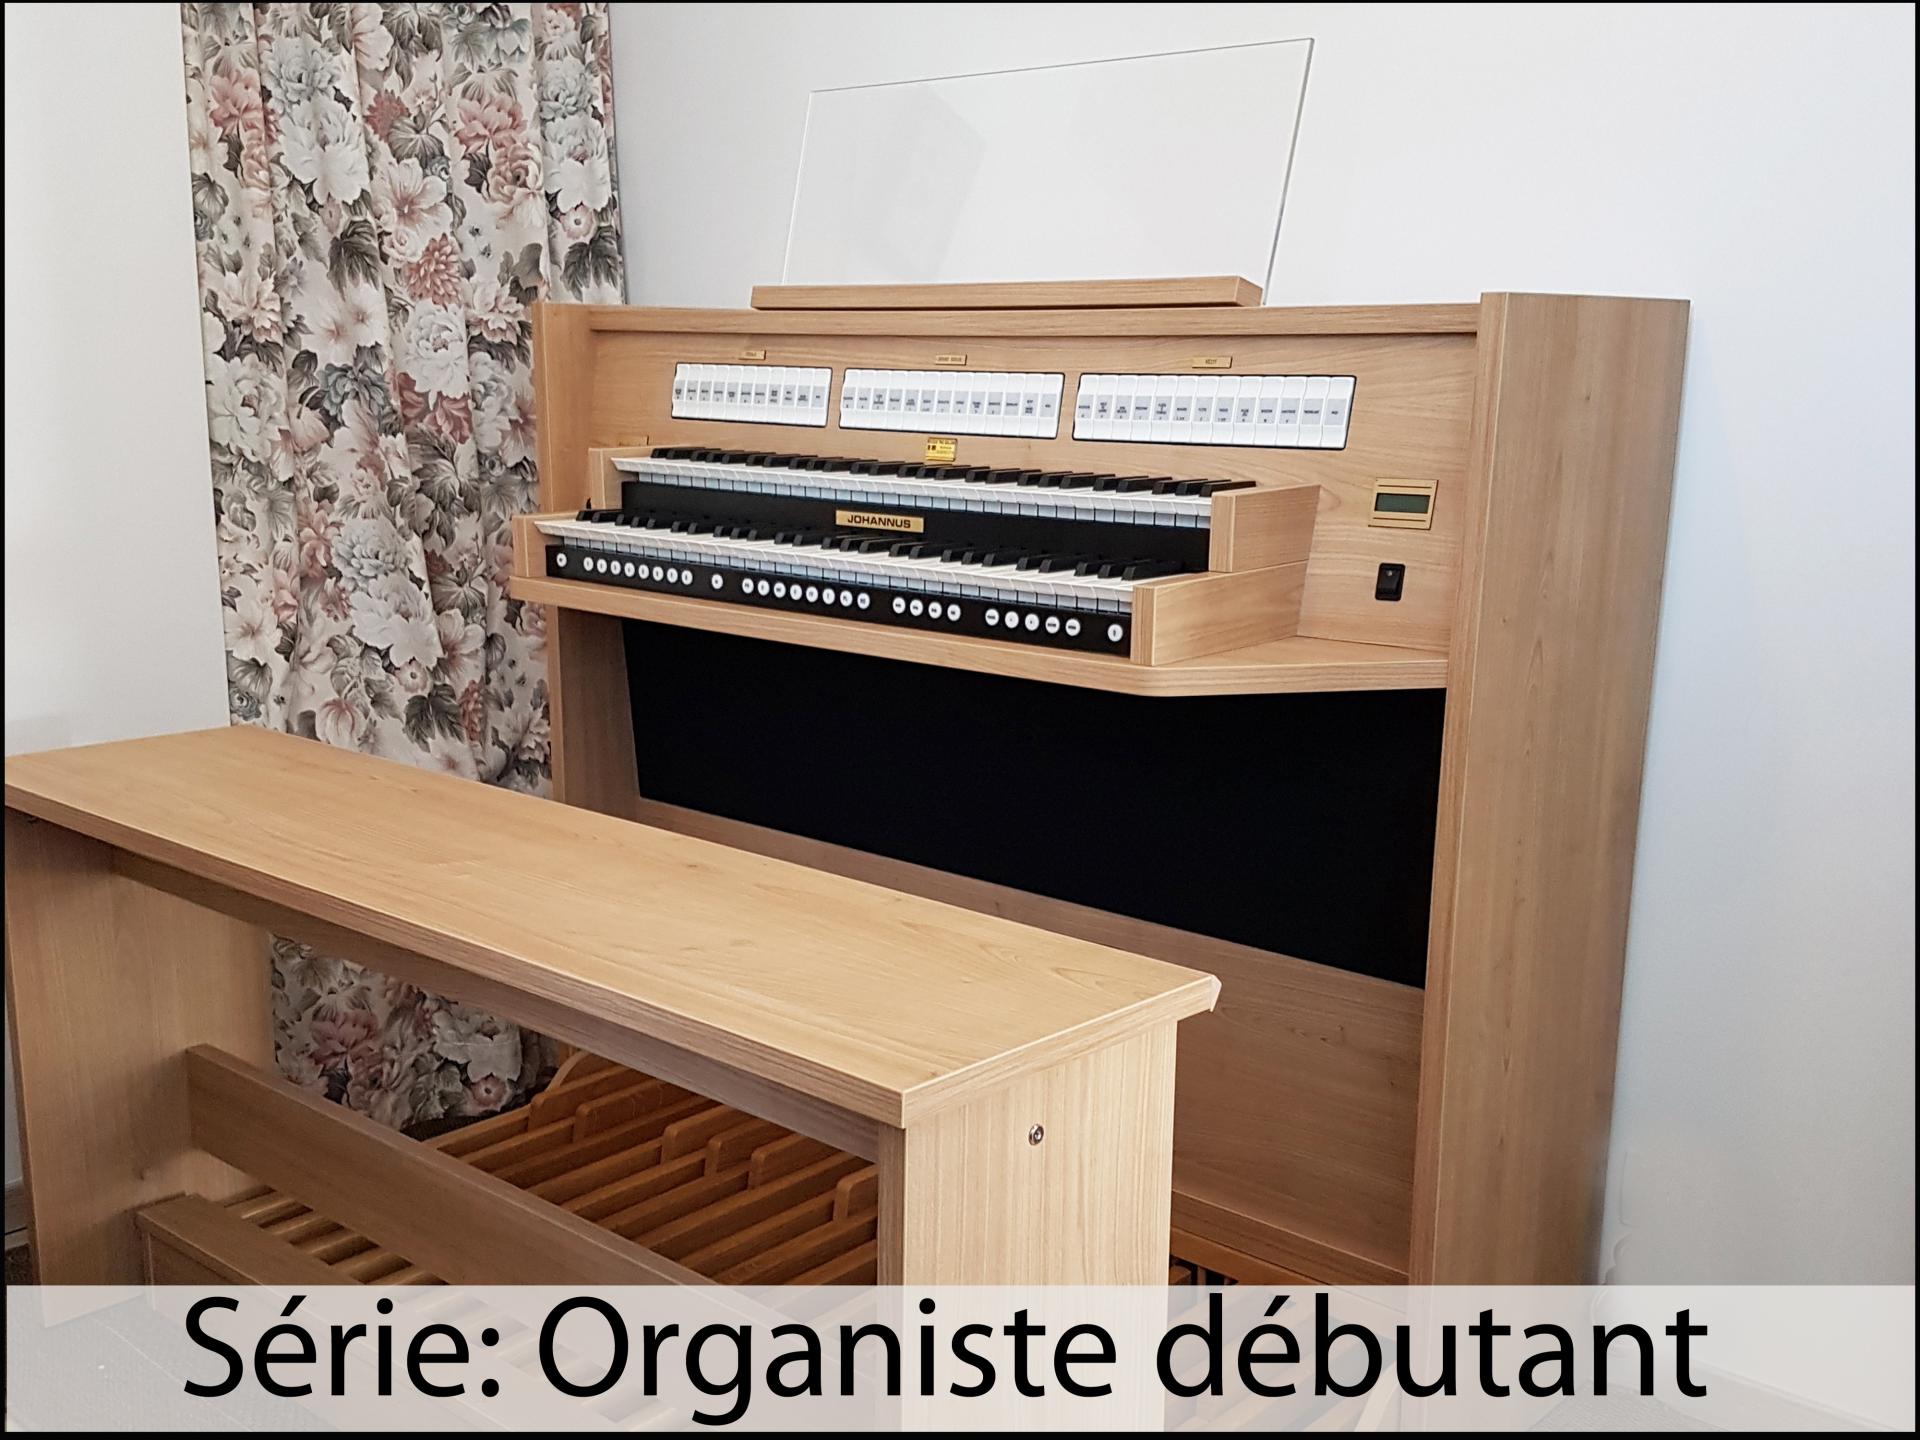 Carre organiste debutant 1